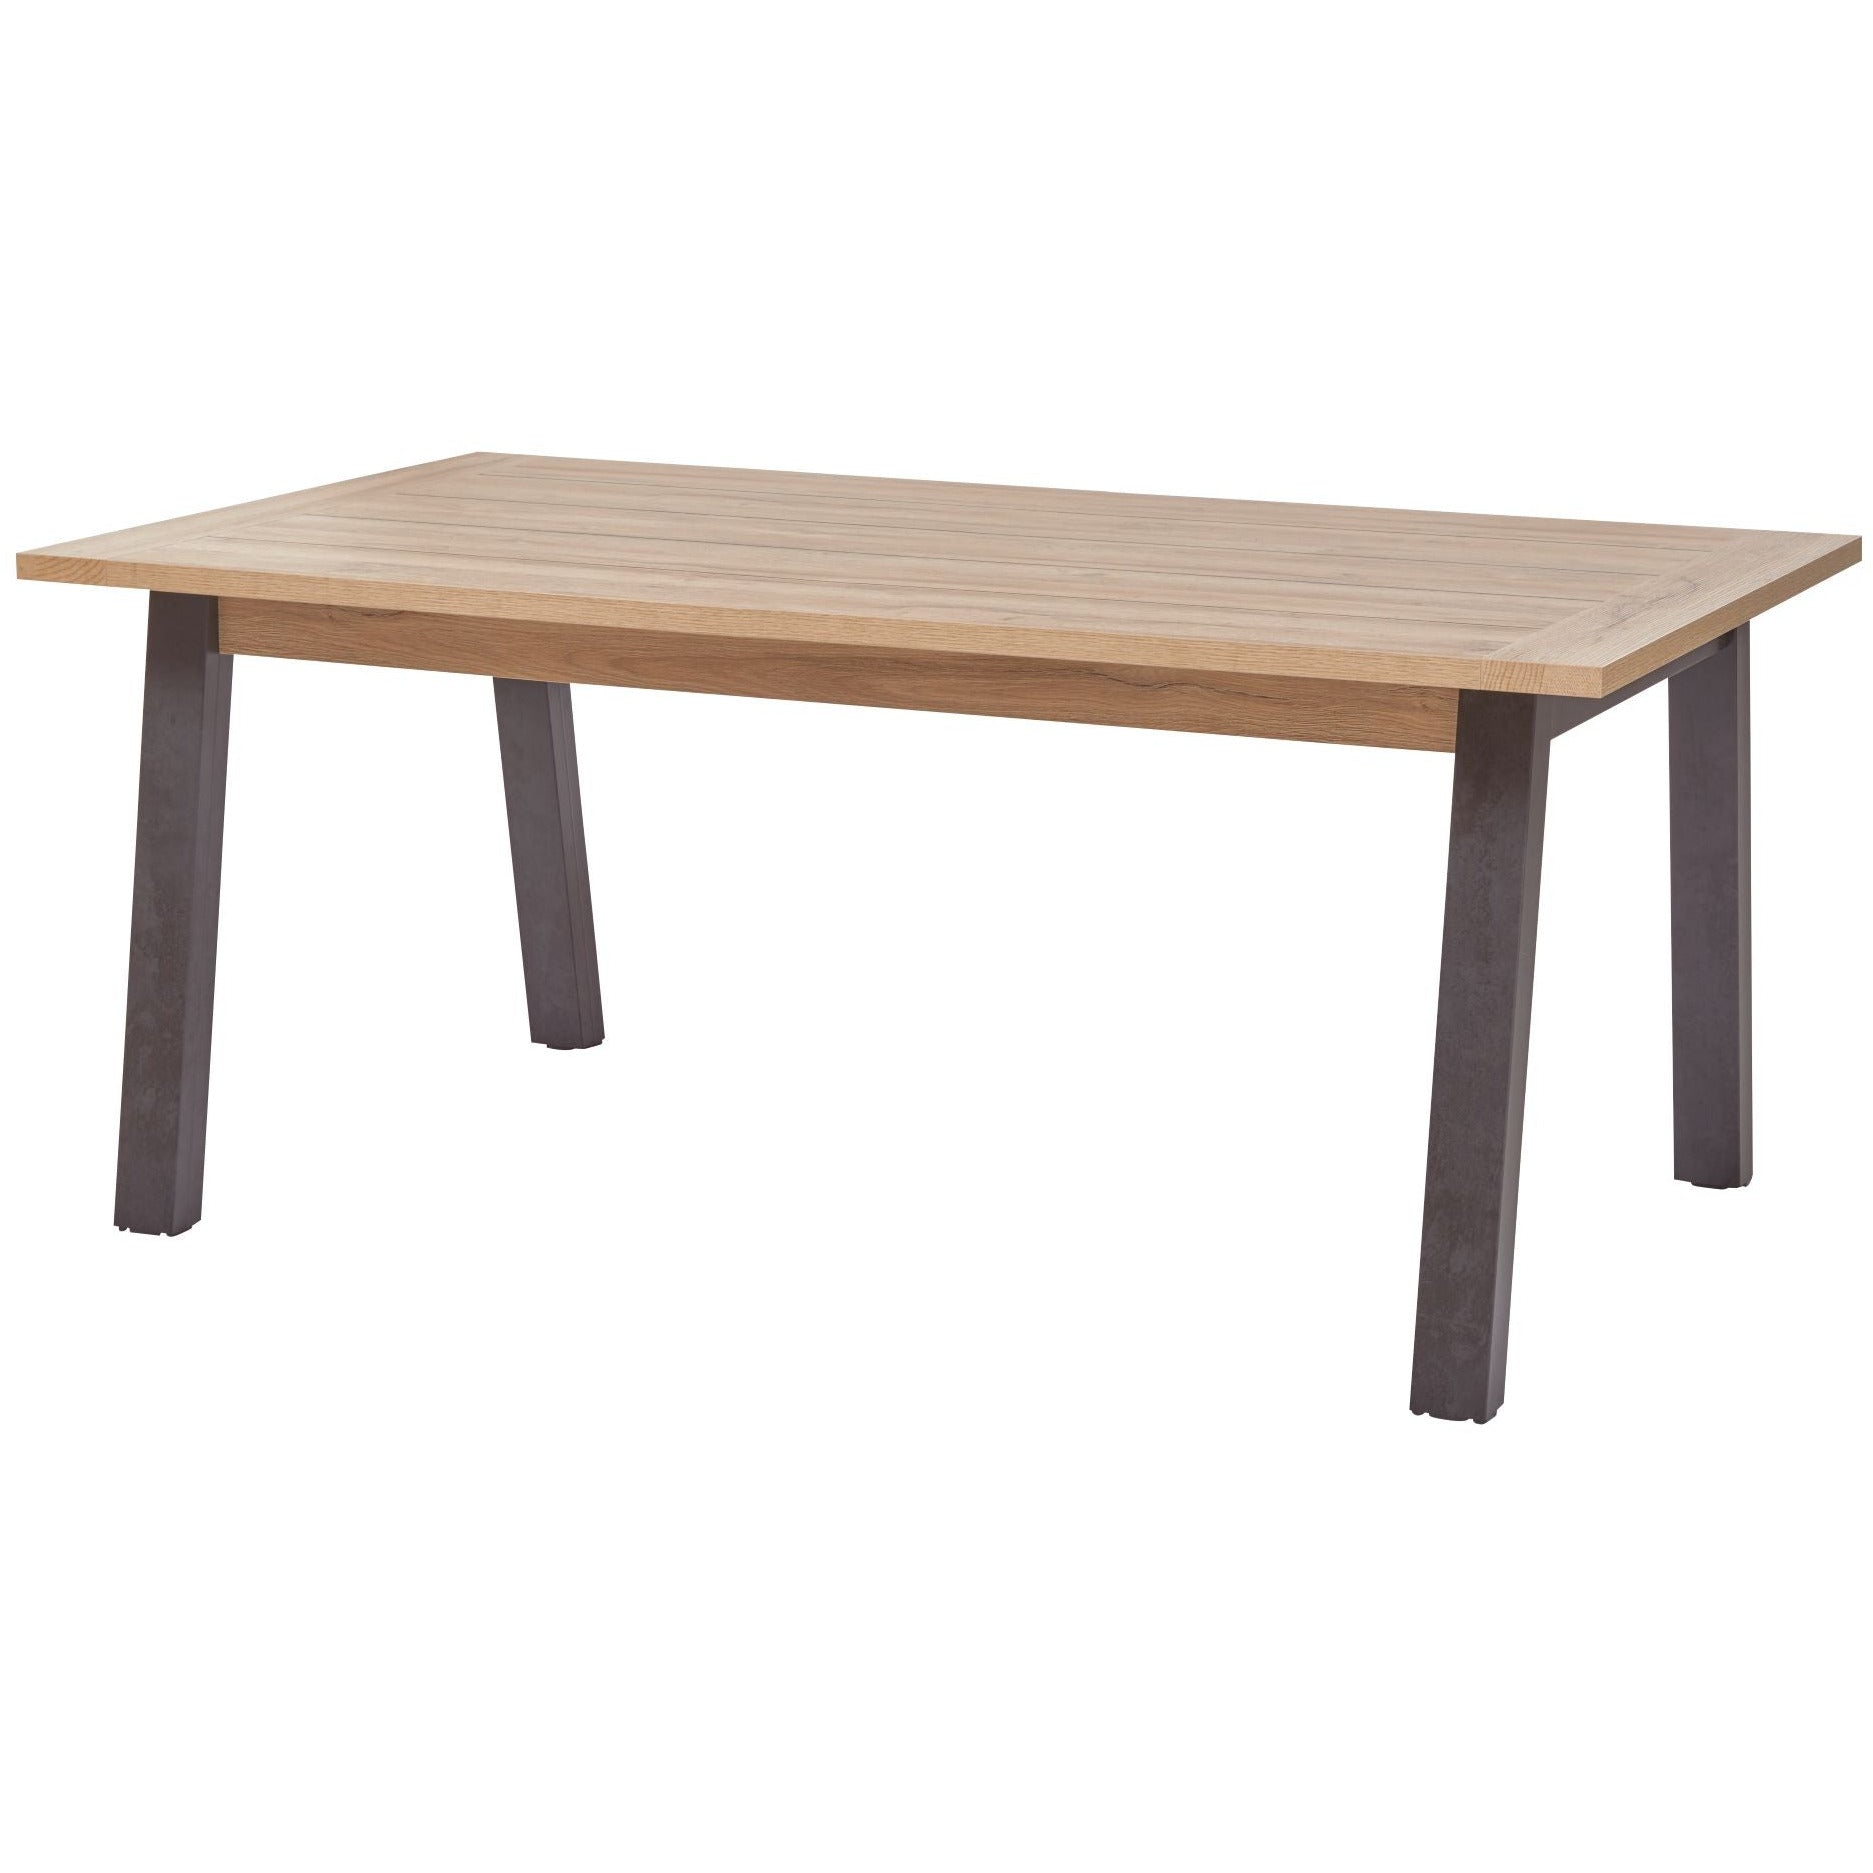 Table | Furniture series Fugue | Natural, gray, brown | 180x100